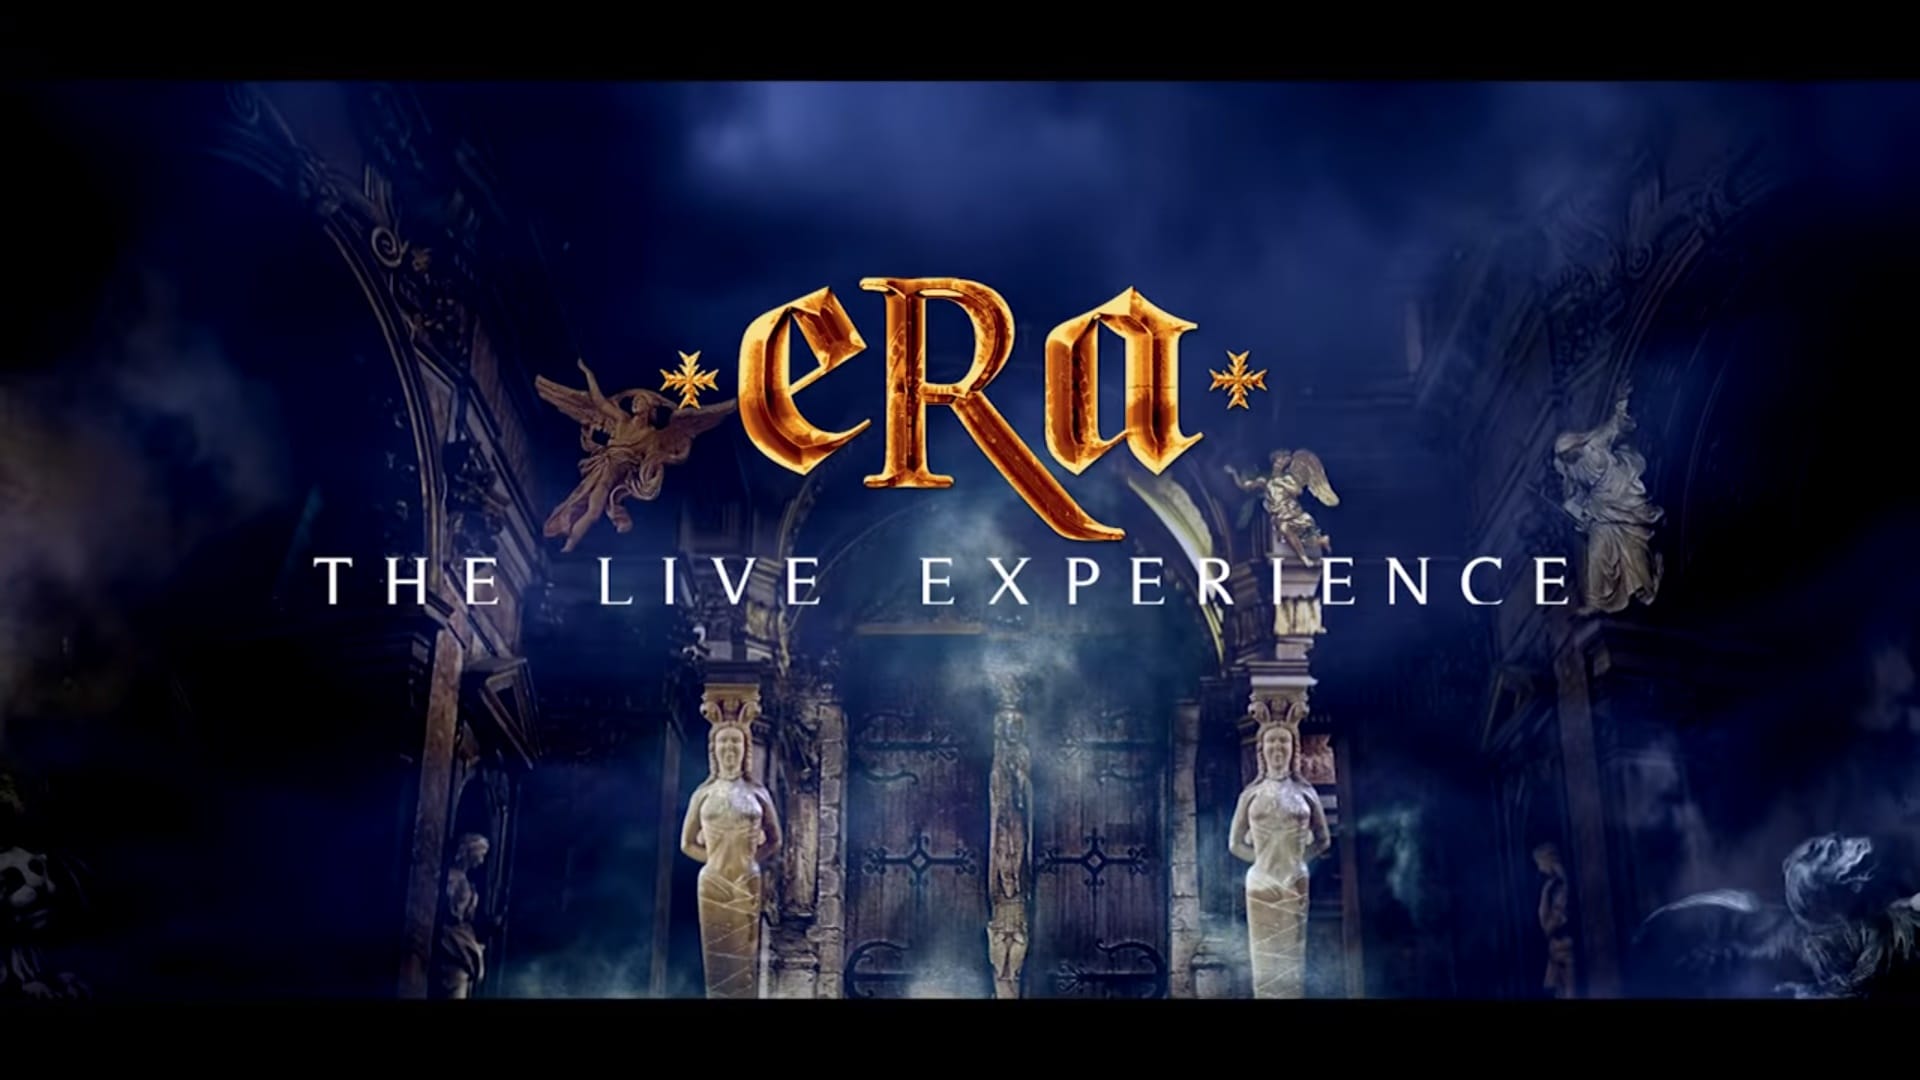 ERA "The Live Experience"